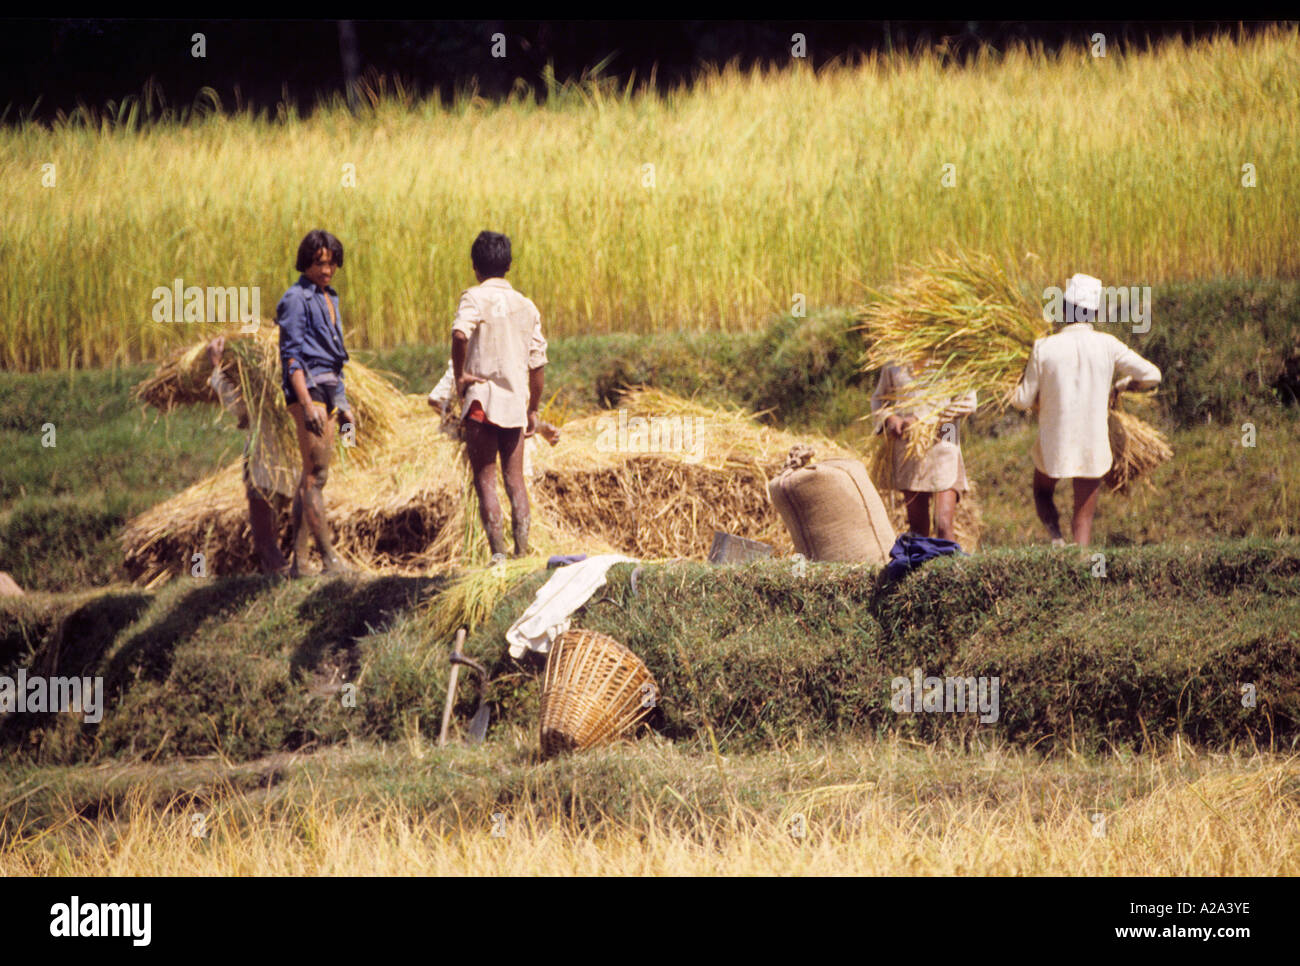 men boy rice field Nepal Asia candid unposed winnowing grain on mat harvest agriculture rural portrait work basket Stock Photo